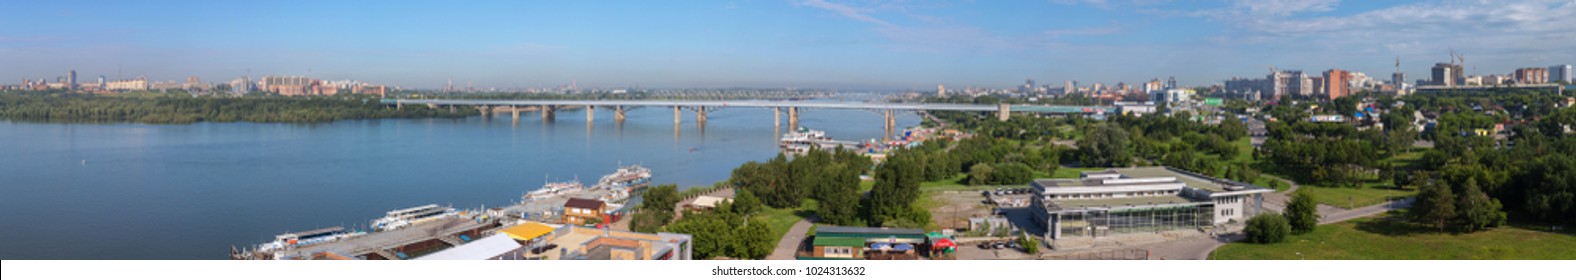 Novosibirsk, Russia - July 20, 2013: Panorama of summer Novosibirsk Octyabrsky bridge across the river Ob